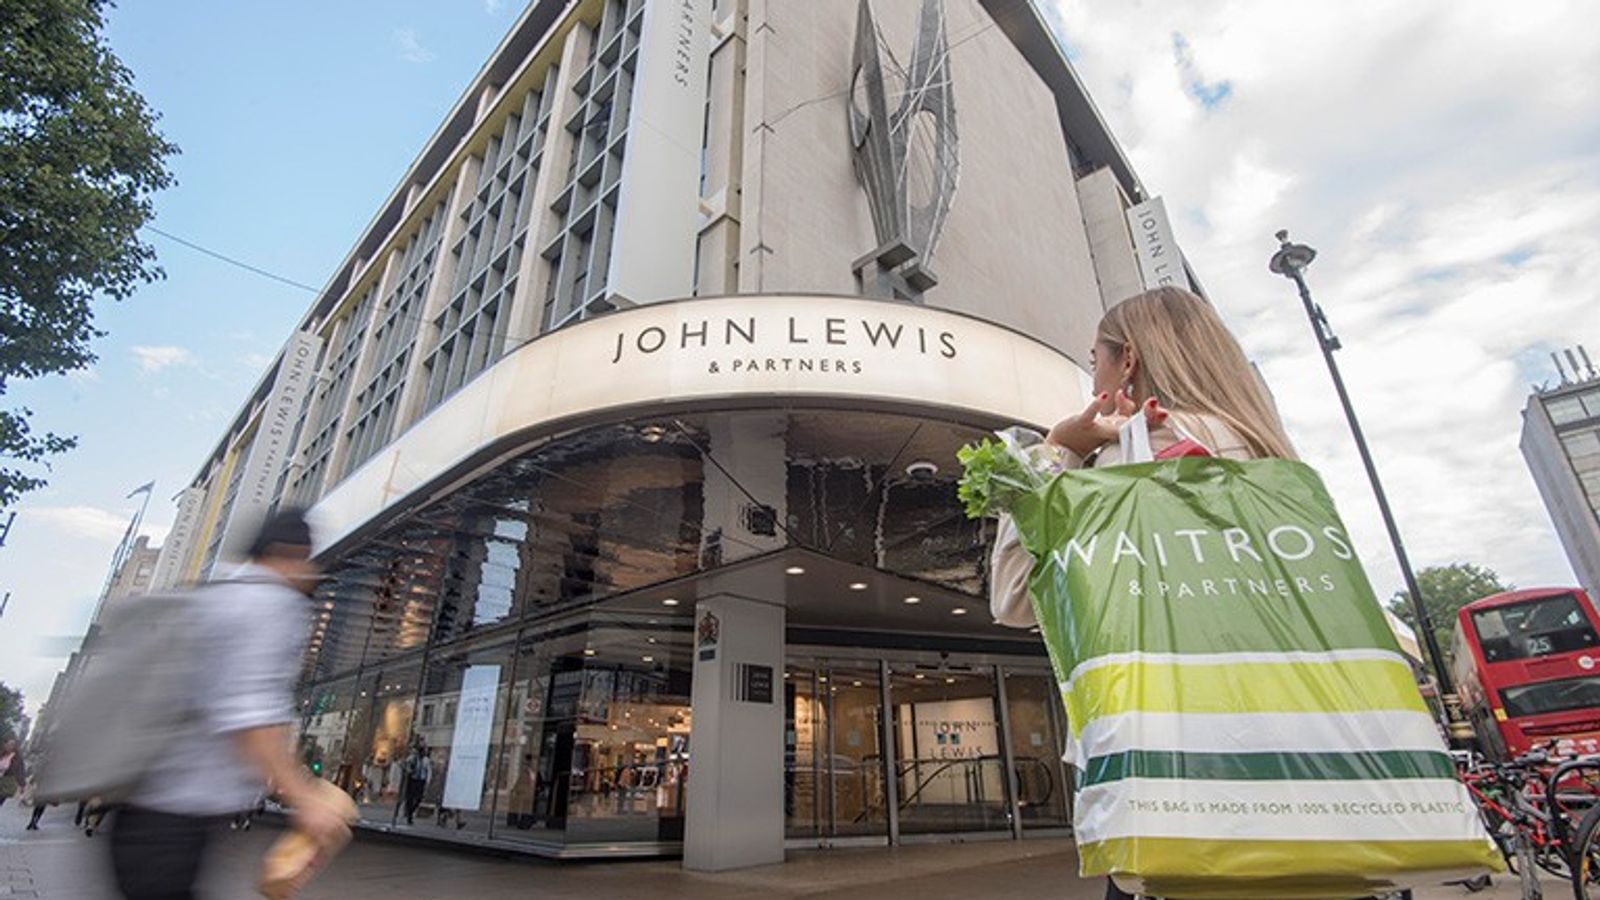 British retailer John Lewis signs £420 million finance deal linked